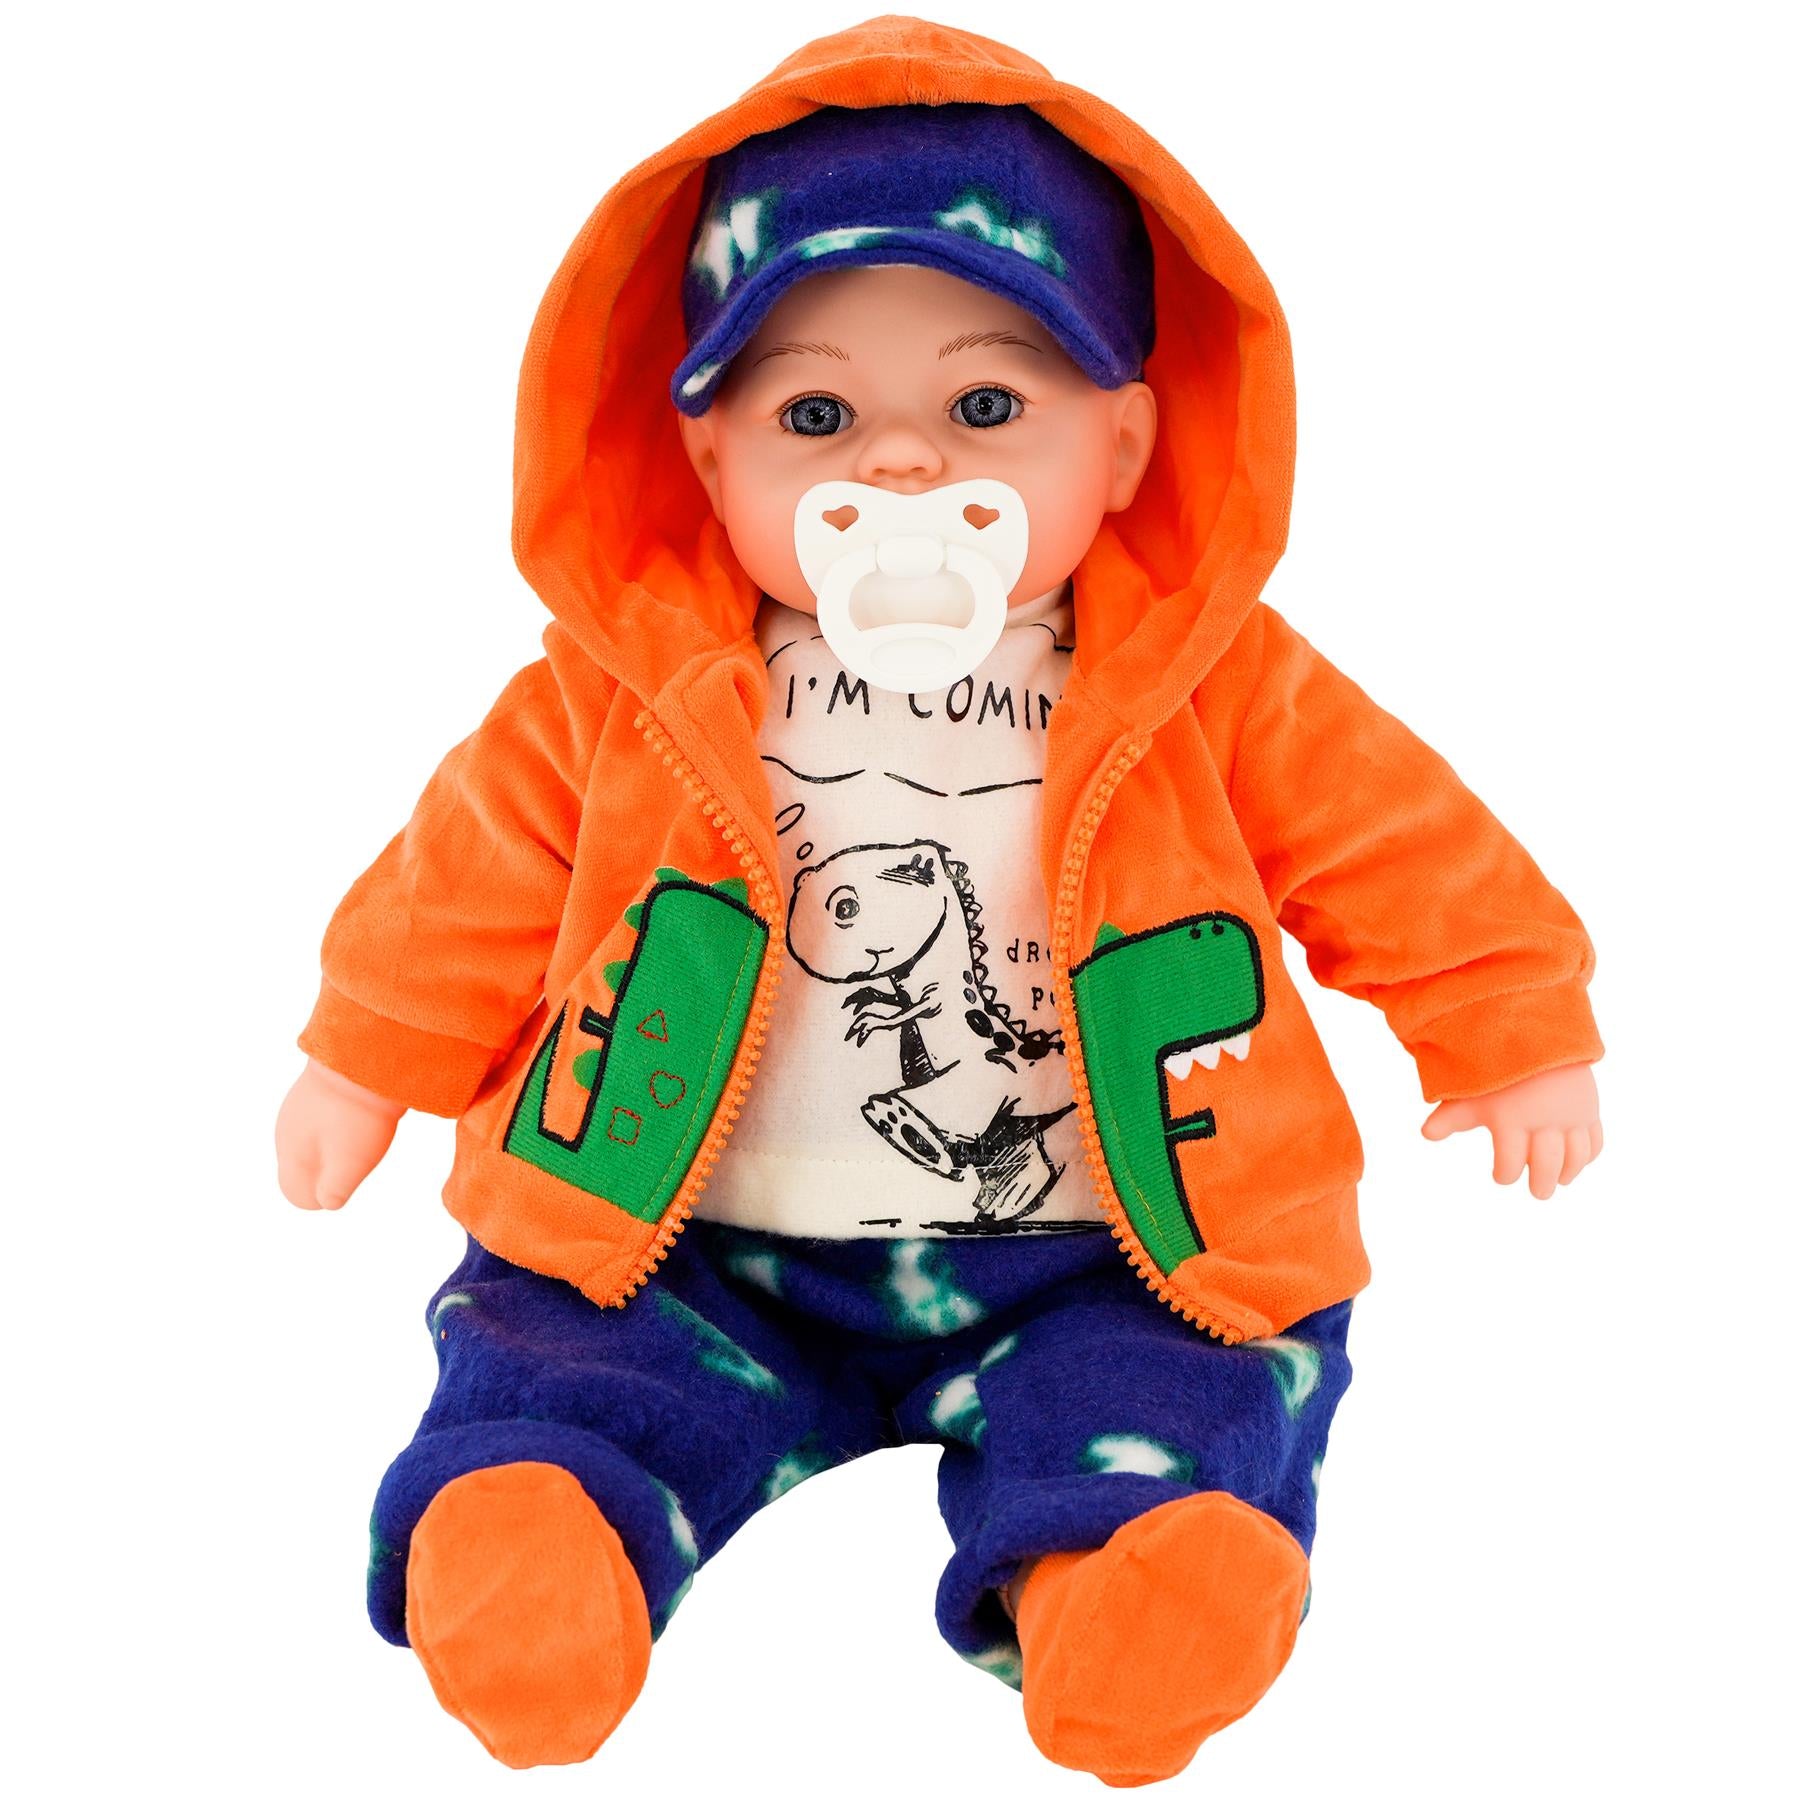 18" BiBi Doll Boy In Orange Jacket In Dinosaur Design by BiBi Doll - The Magic Toy Shop